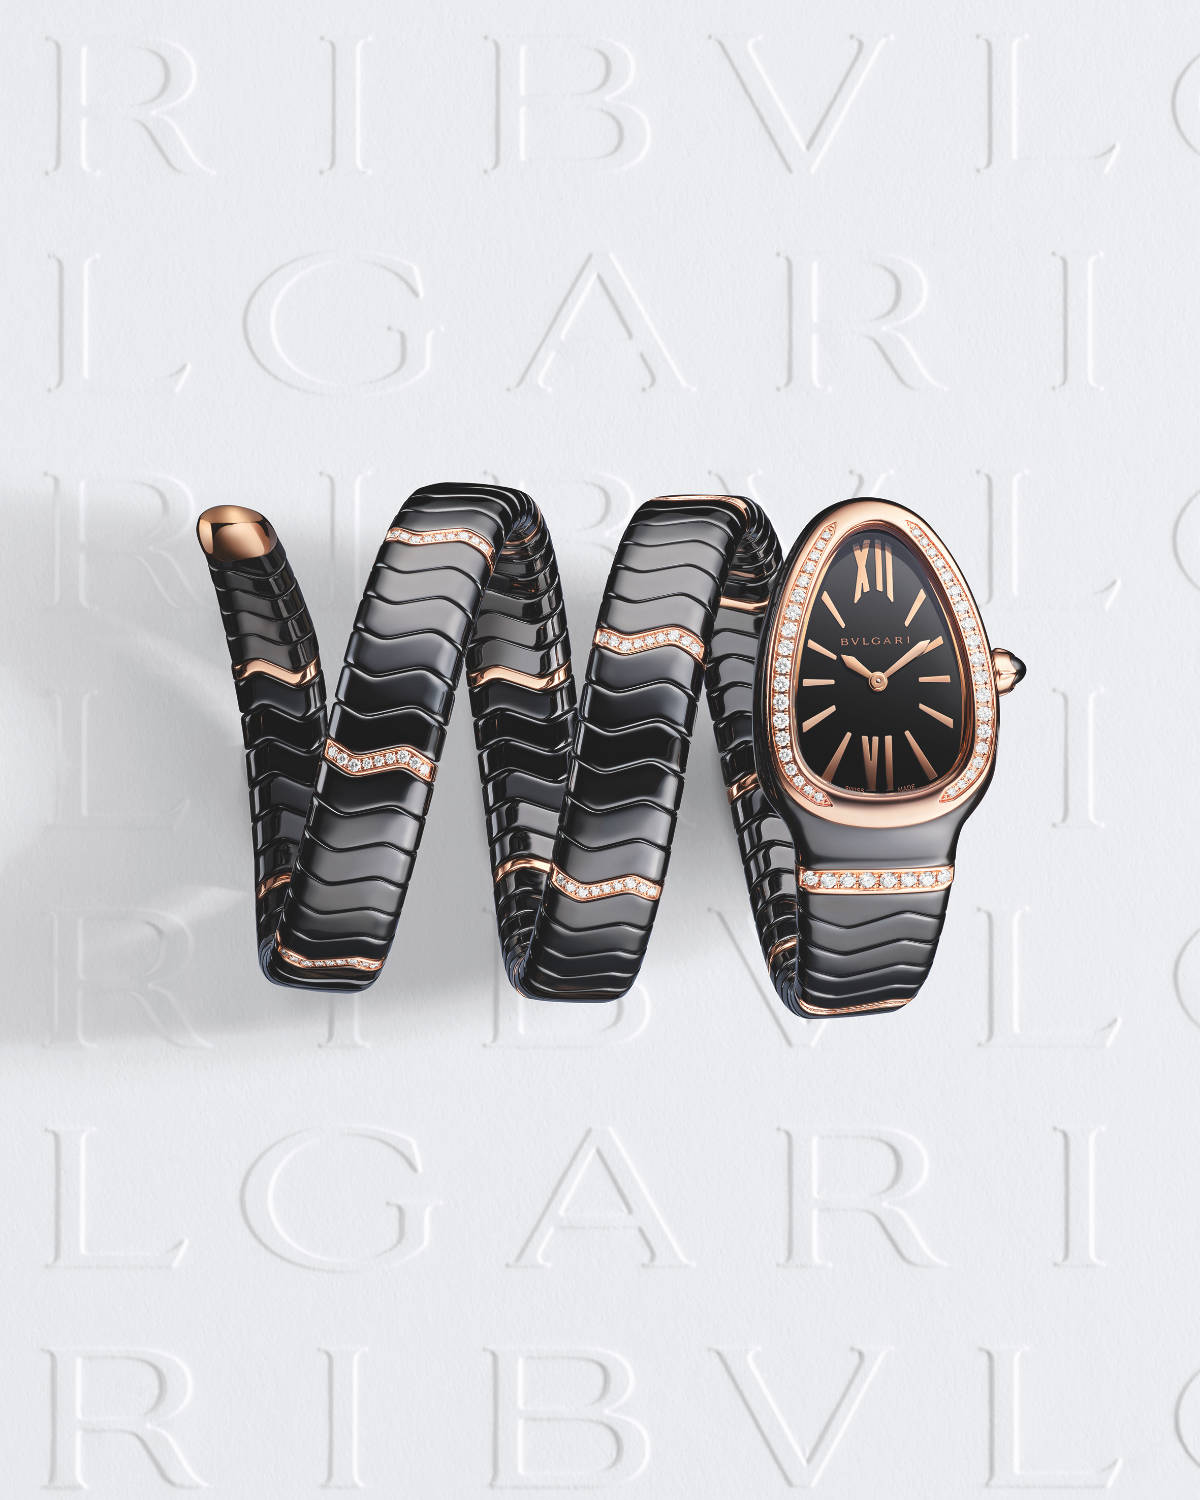 Bulgari Present Its New Serpenti Spiga Ceramic Watch